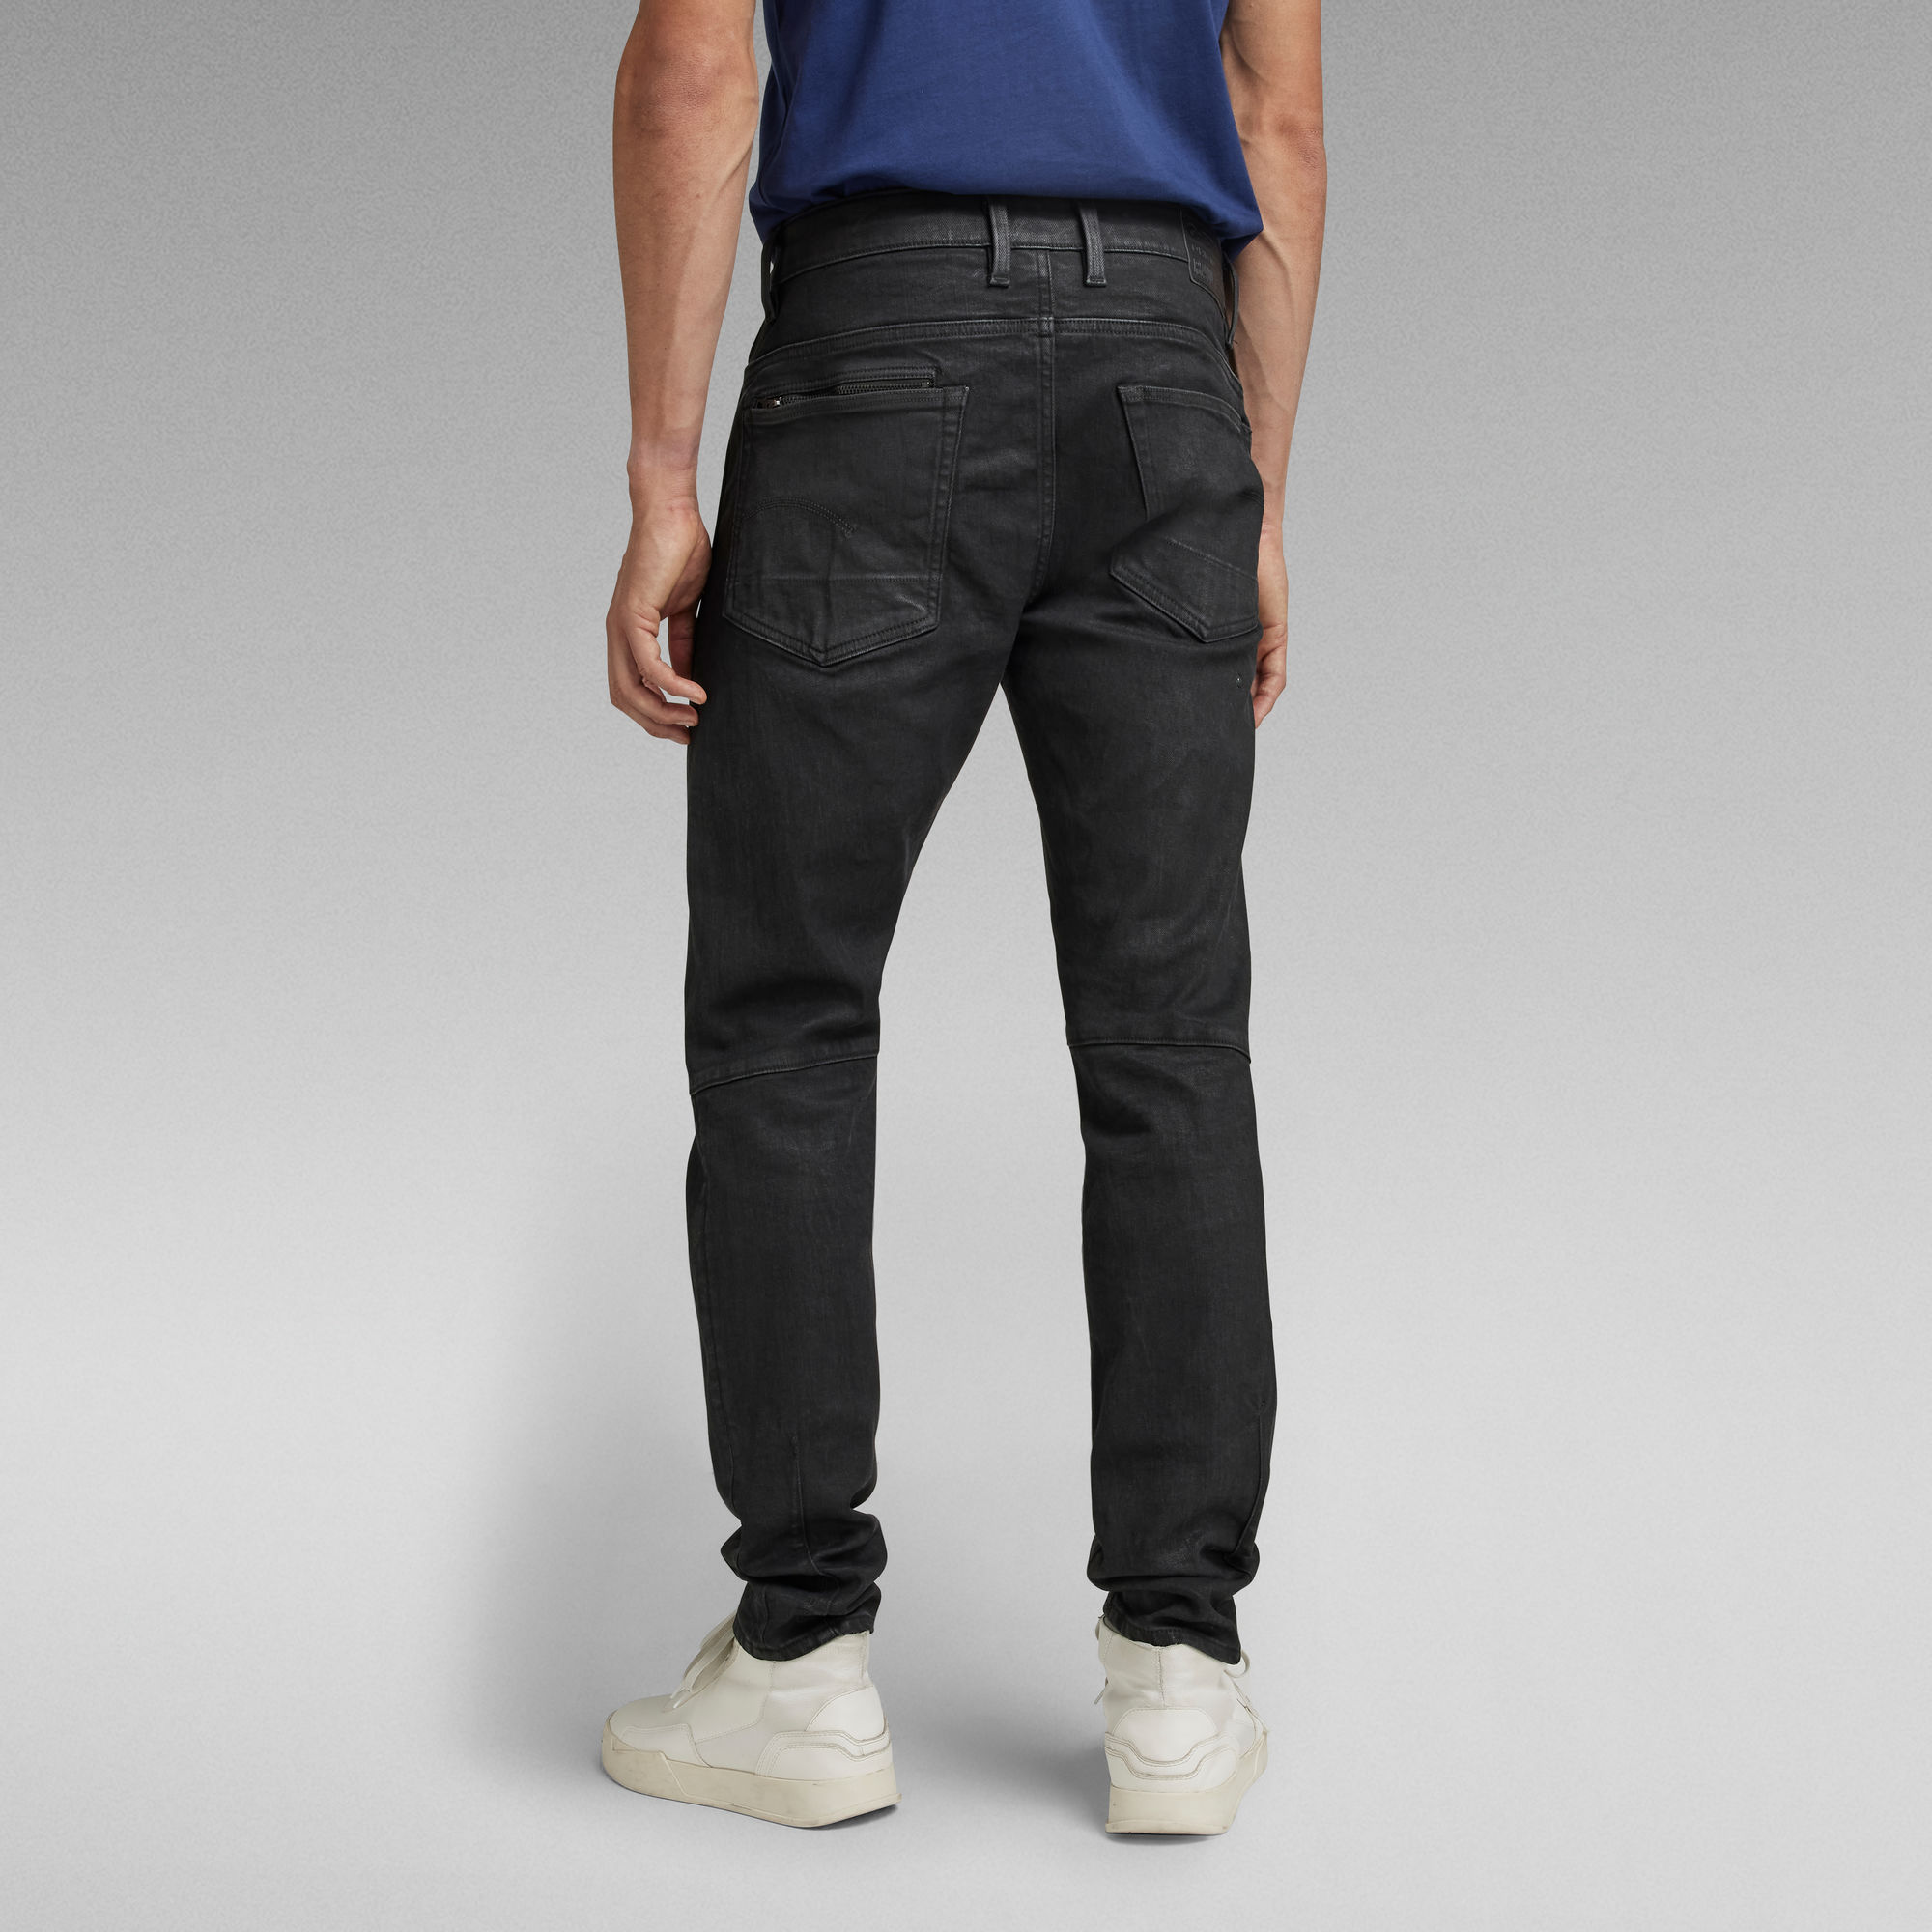 Citishield 3D Slim Originals Jeans | Black | G-Star RAW®